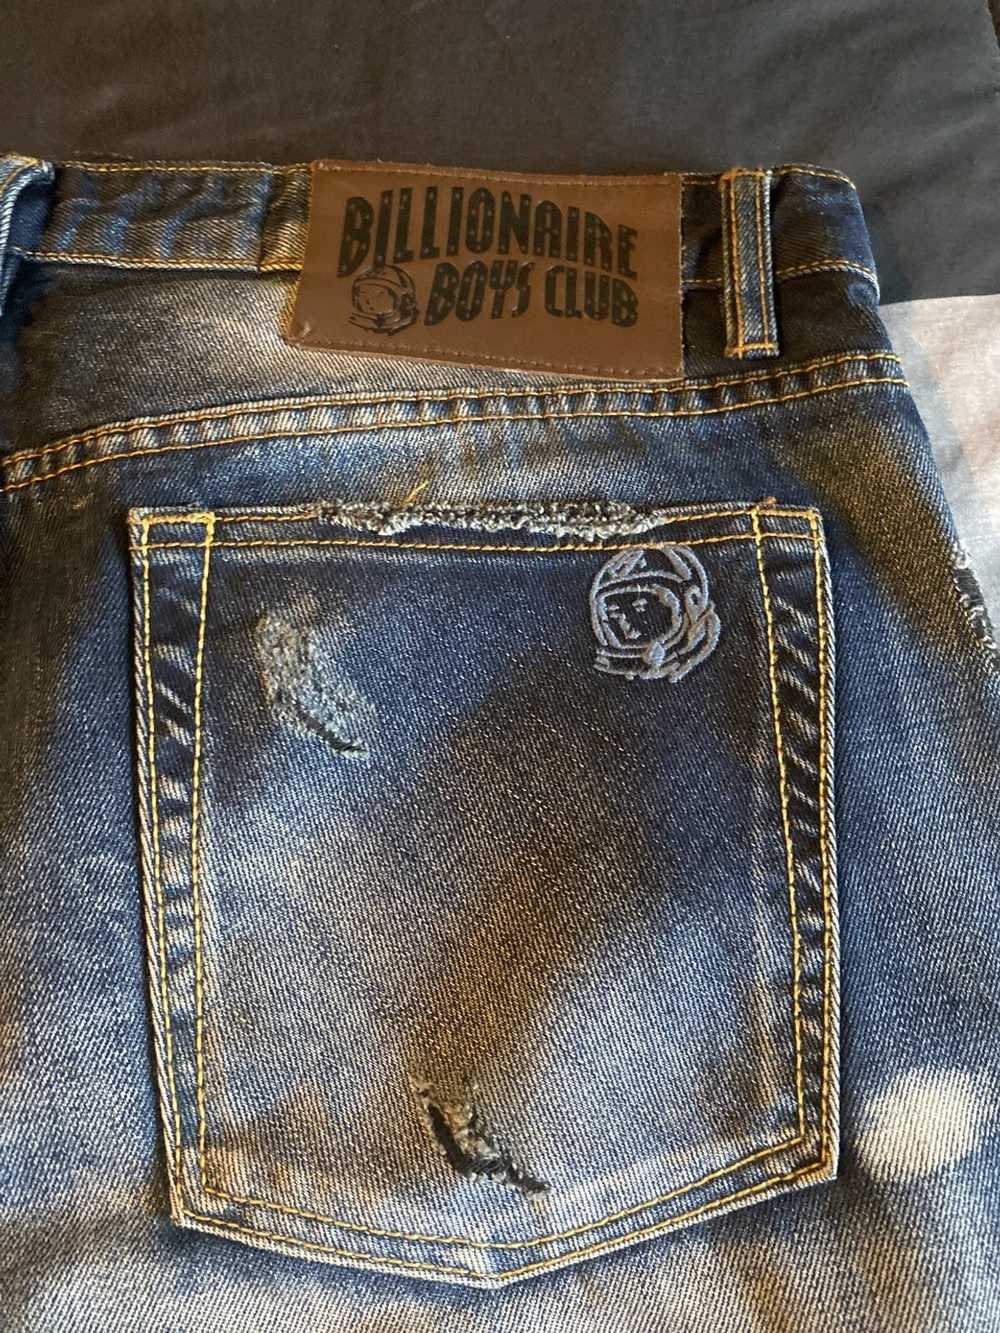 Billionaire Boys Club BBC denim jeans - image 4